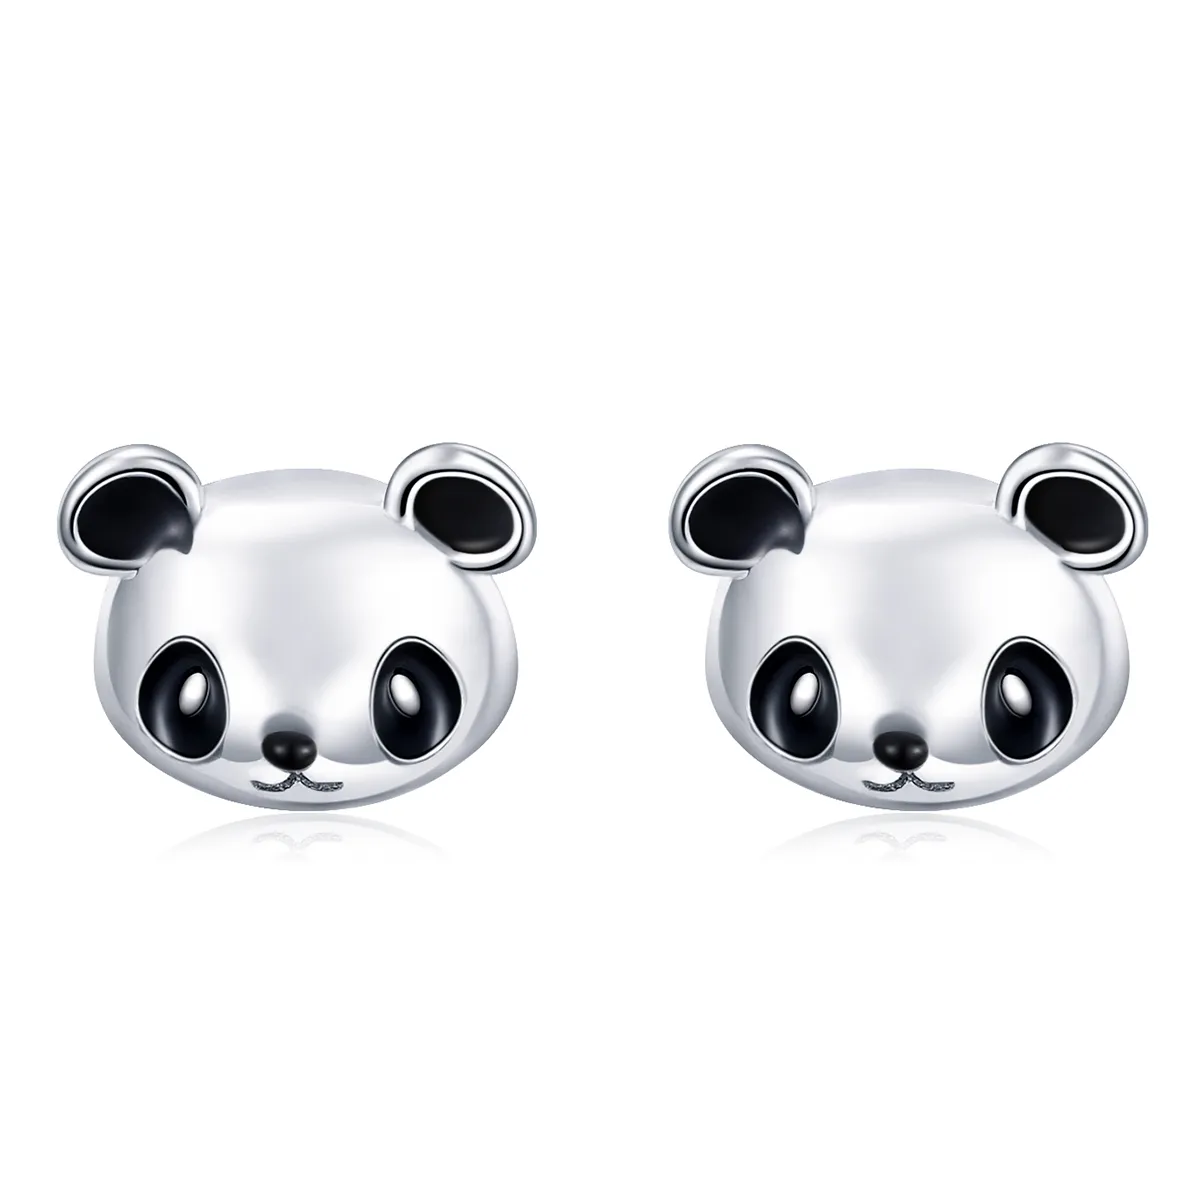 Pandora Style Silver Cute Panda Stud Earrings - SCE386